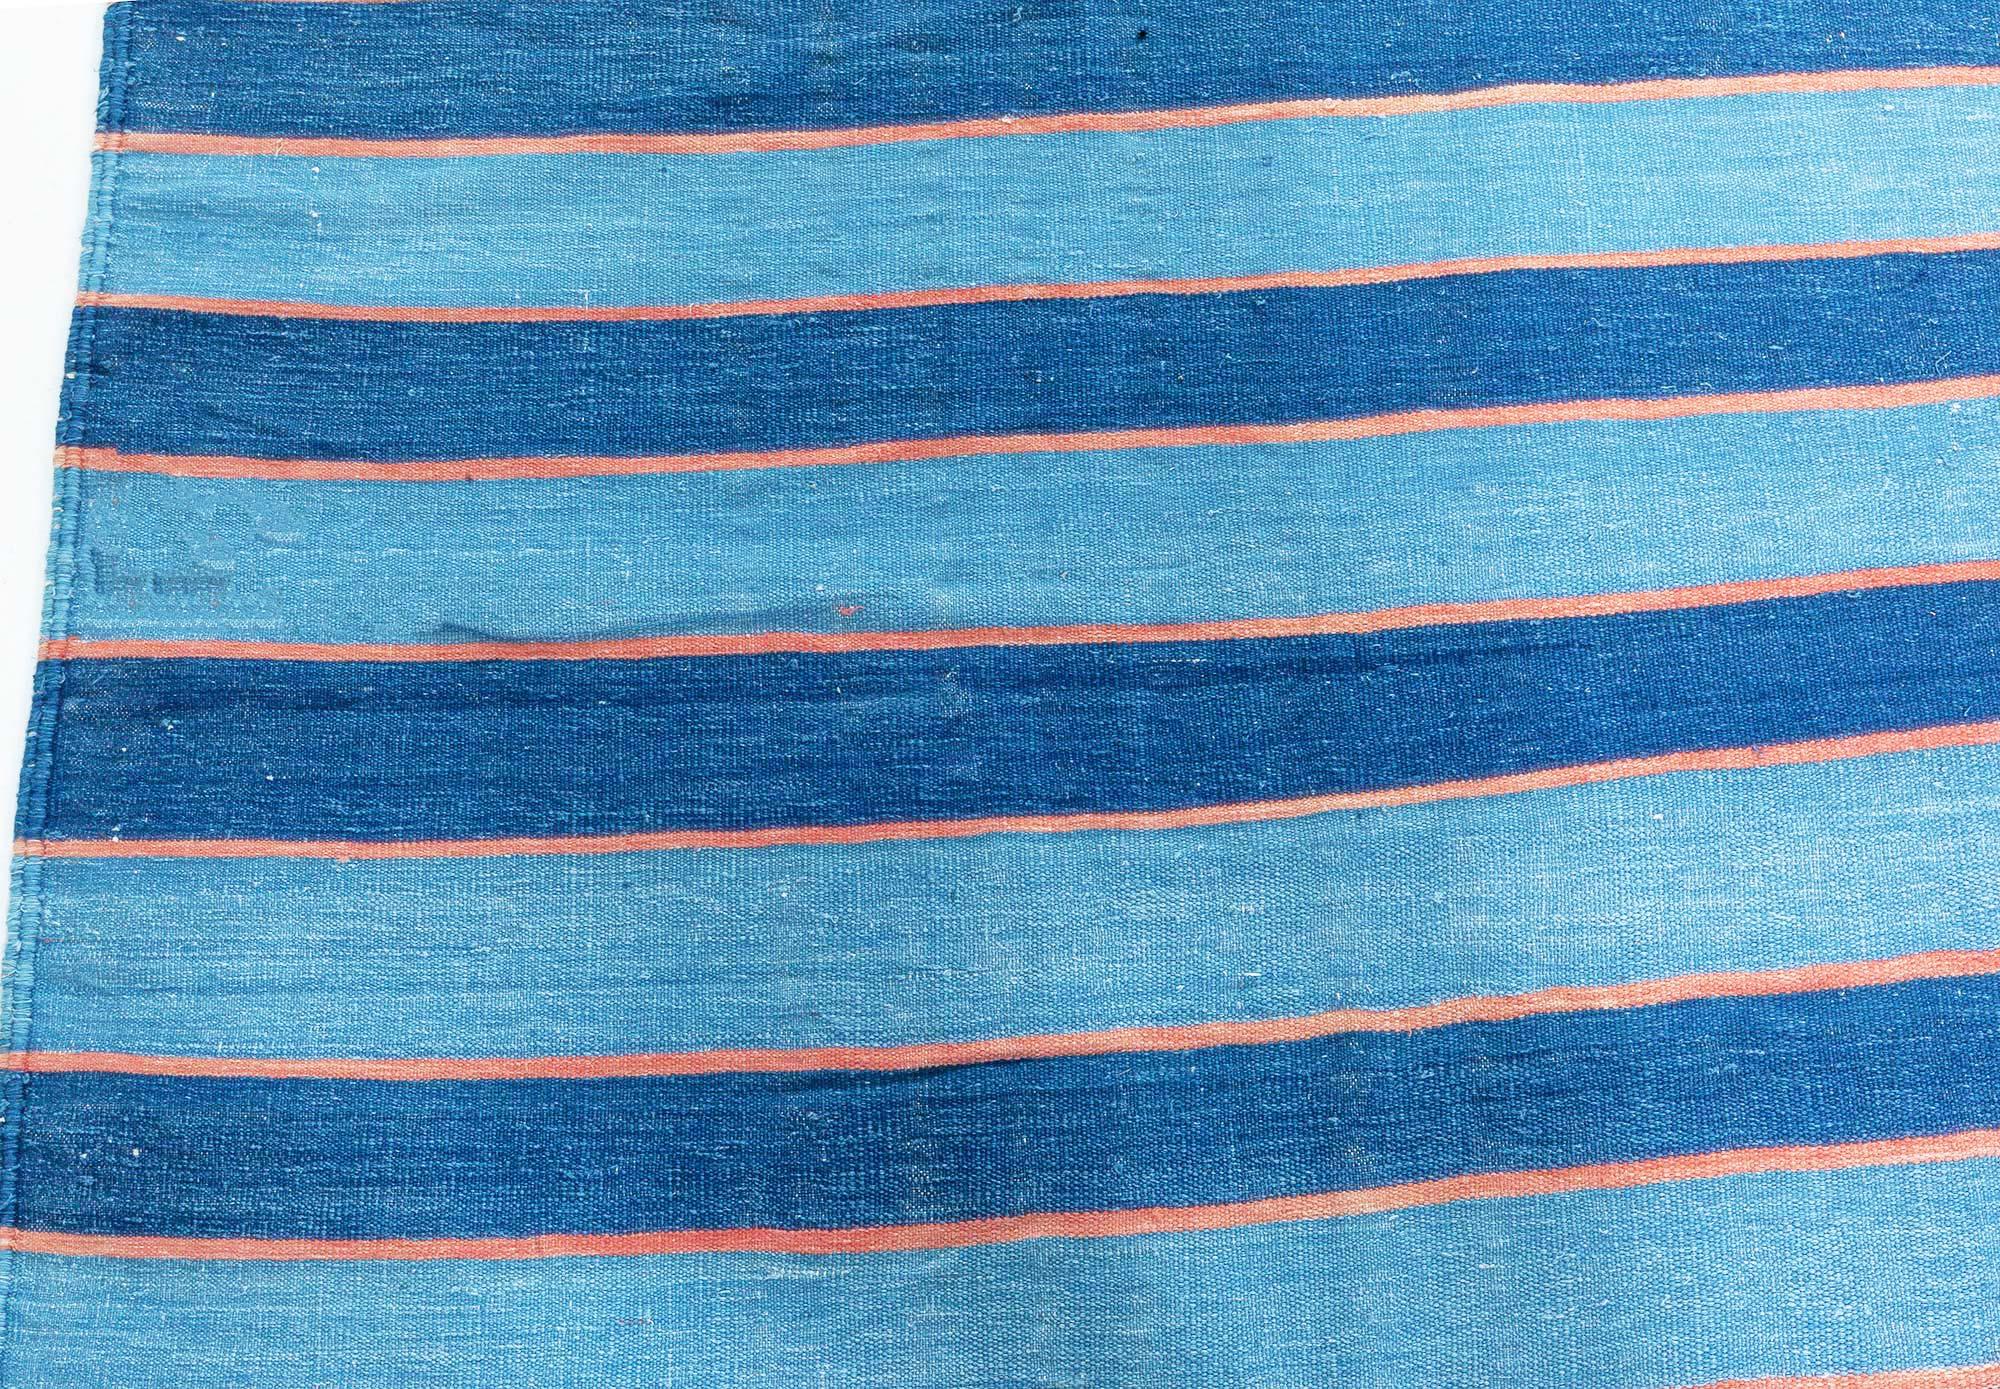 Vintage Indian Dhurrie striped blue rug
Size: 15'5